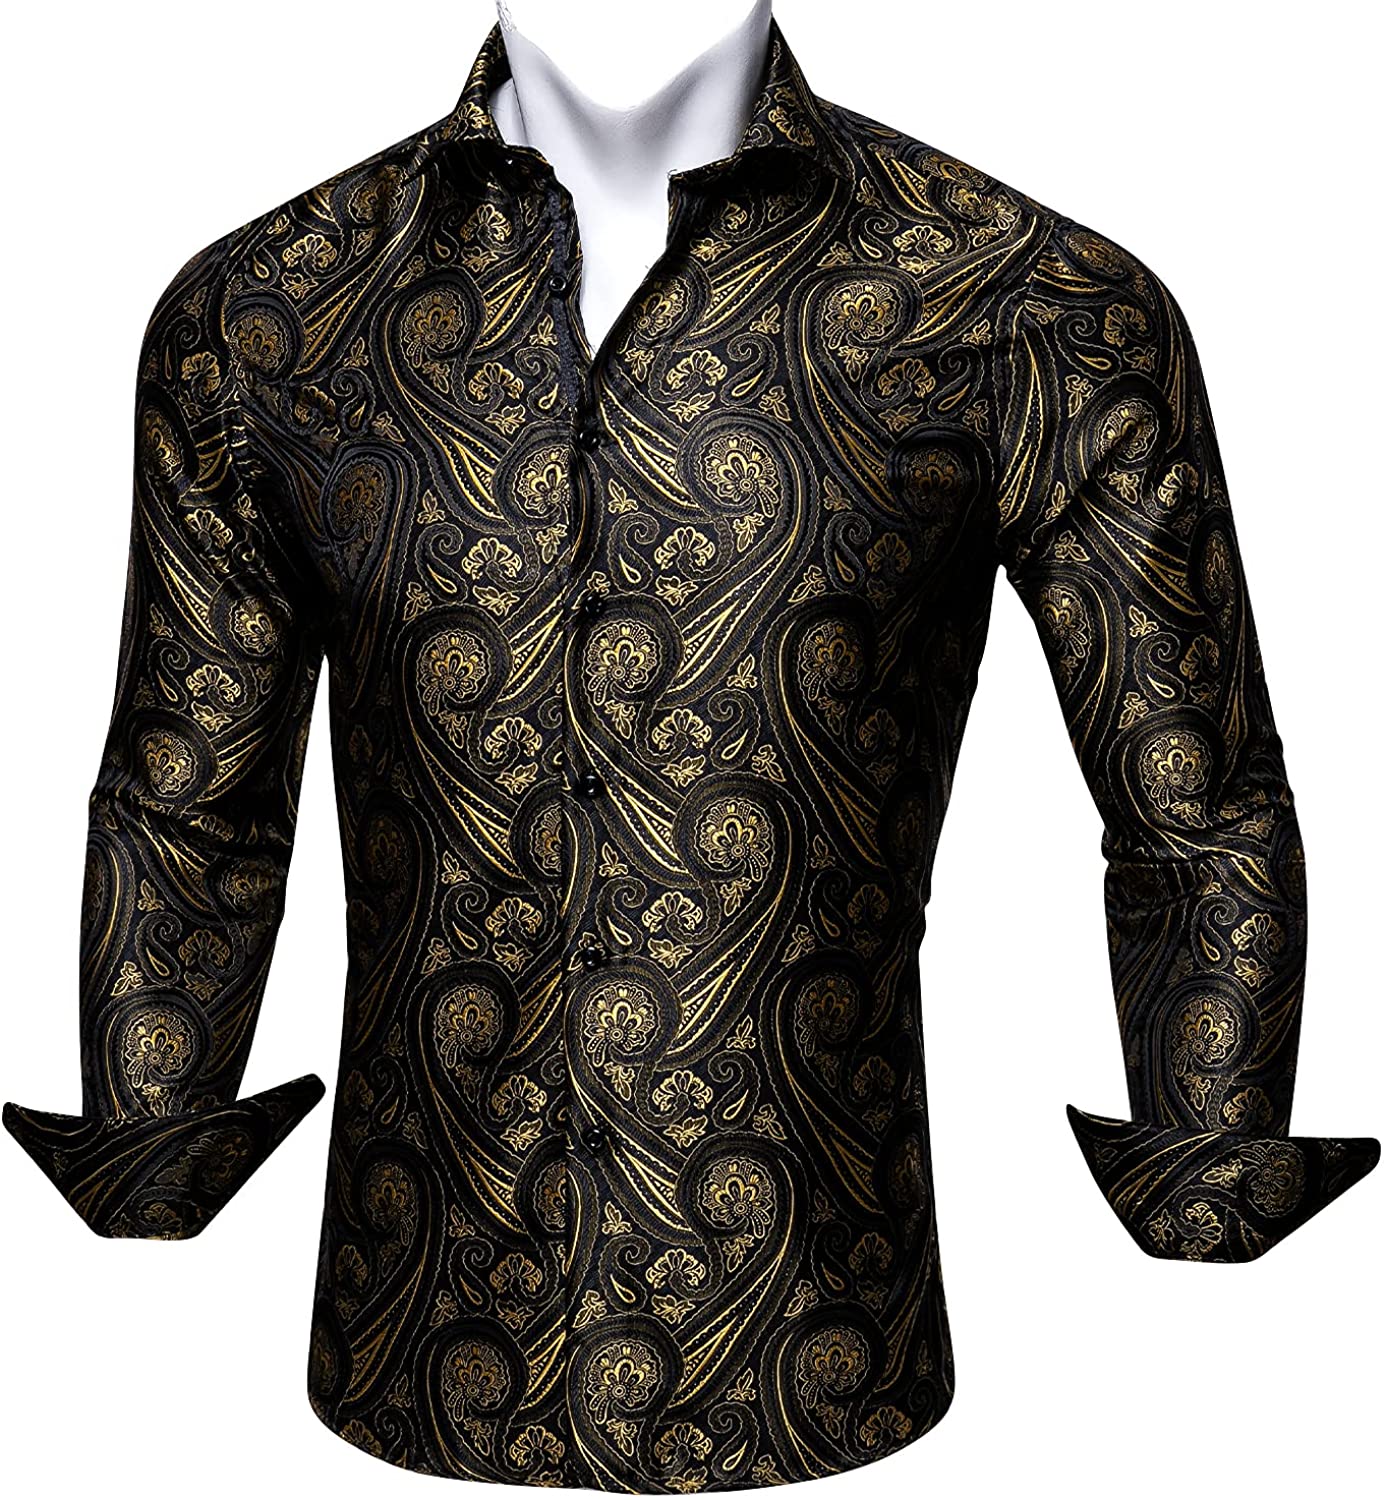 Barry.wang Men Scarves Luxury Jacquard Paisley/floral Design Black